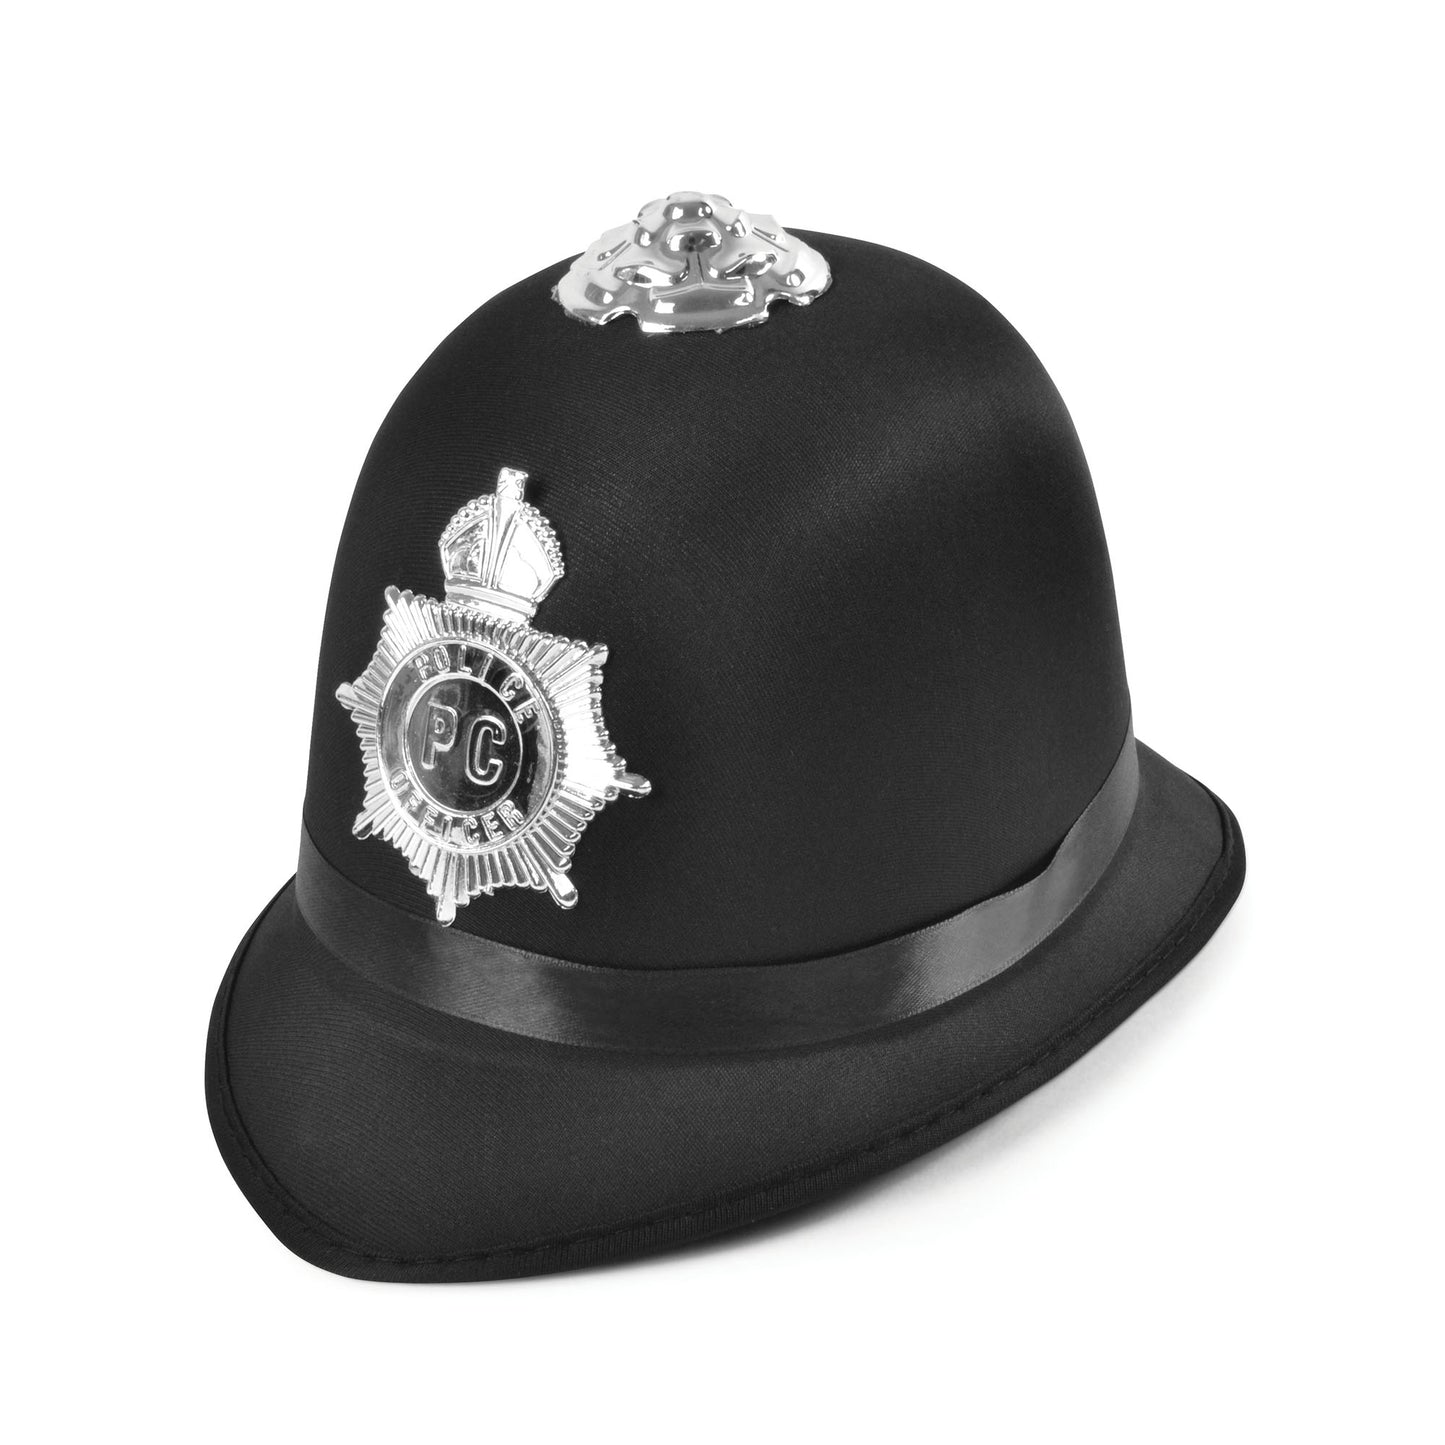 Police Bobby Hat (Satin Fabric)